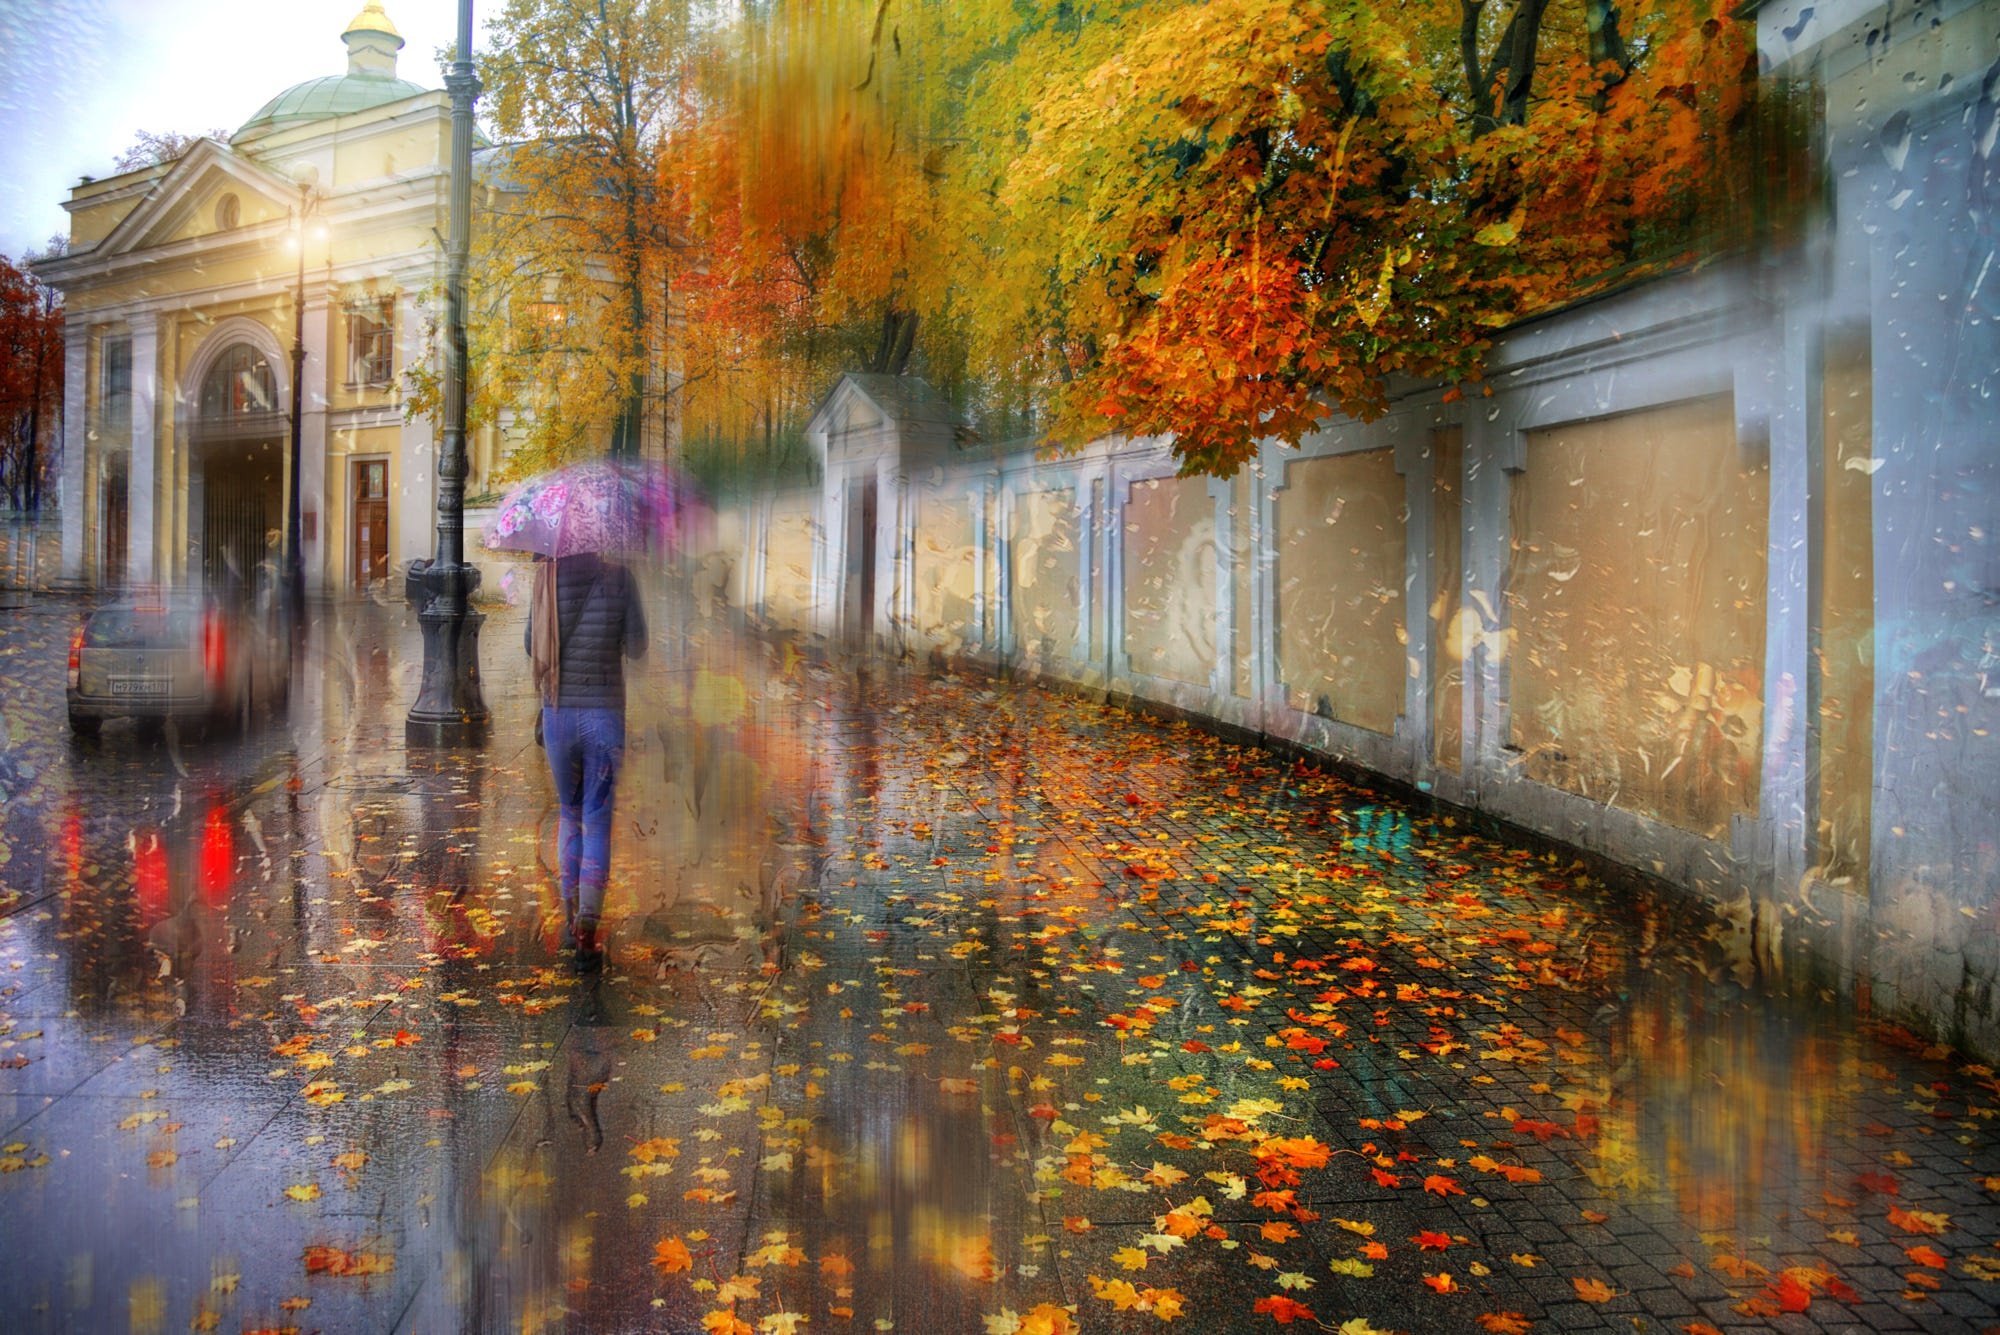 Анализ осенний дождь. Осенний дождь в городе. Осень дождь. Осень город дождь. Холодная дождливая осень.